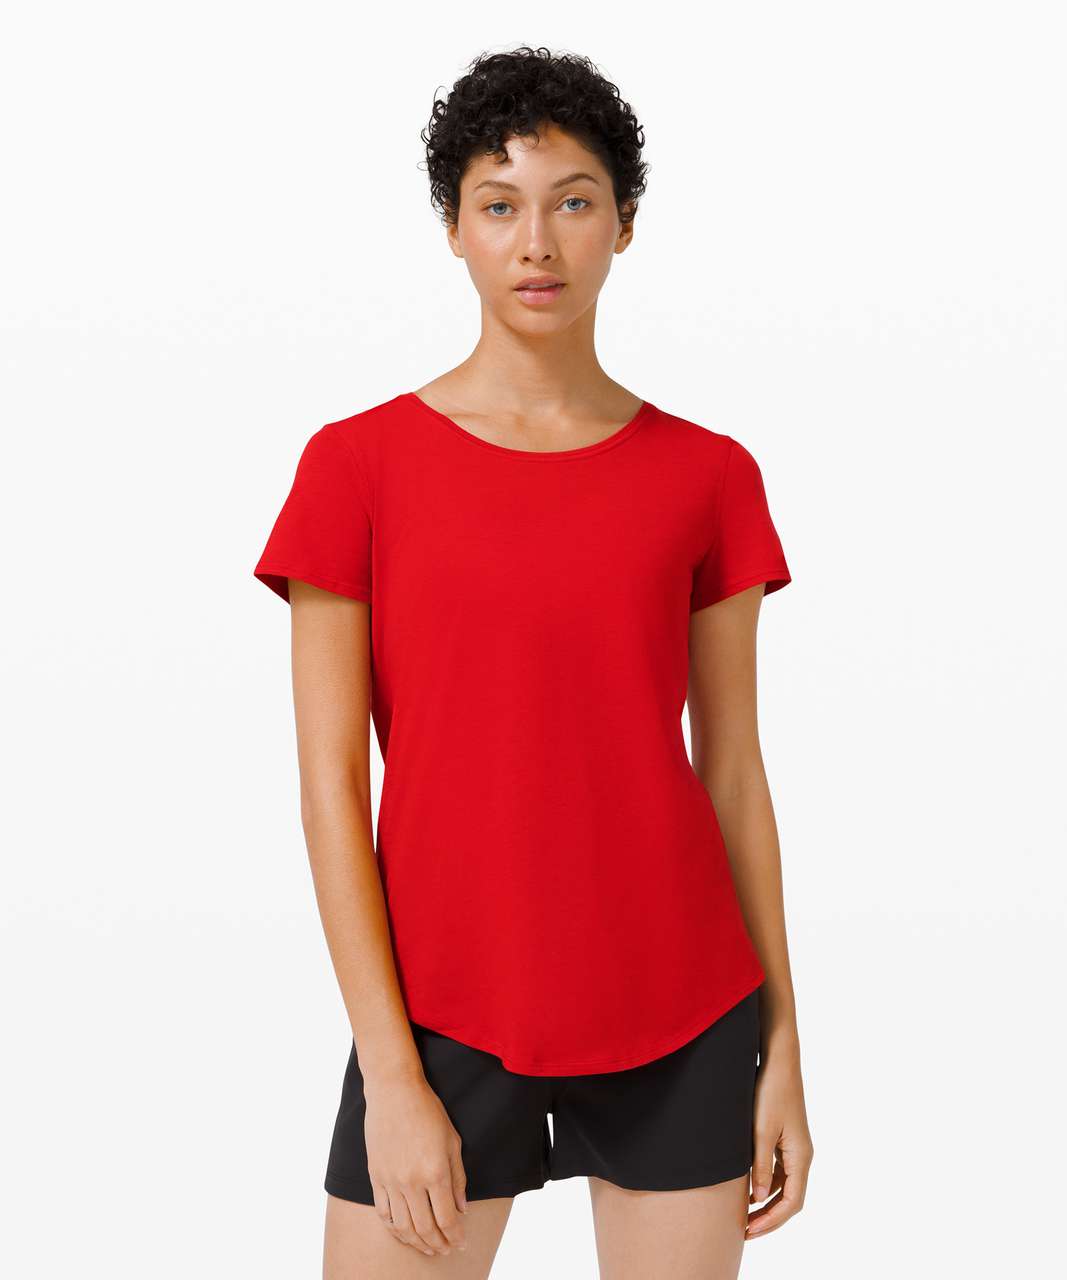 Lululemon Love Crew Short Sleeve T-Shirt Size 4 – Love Red